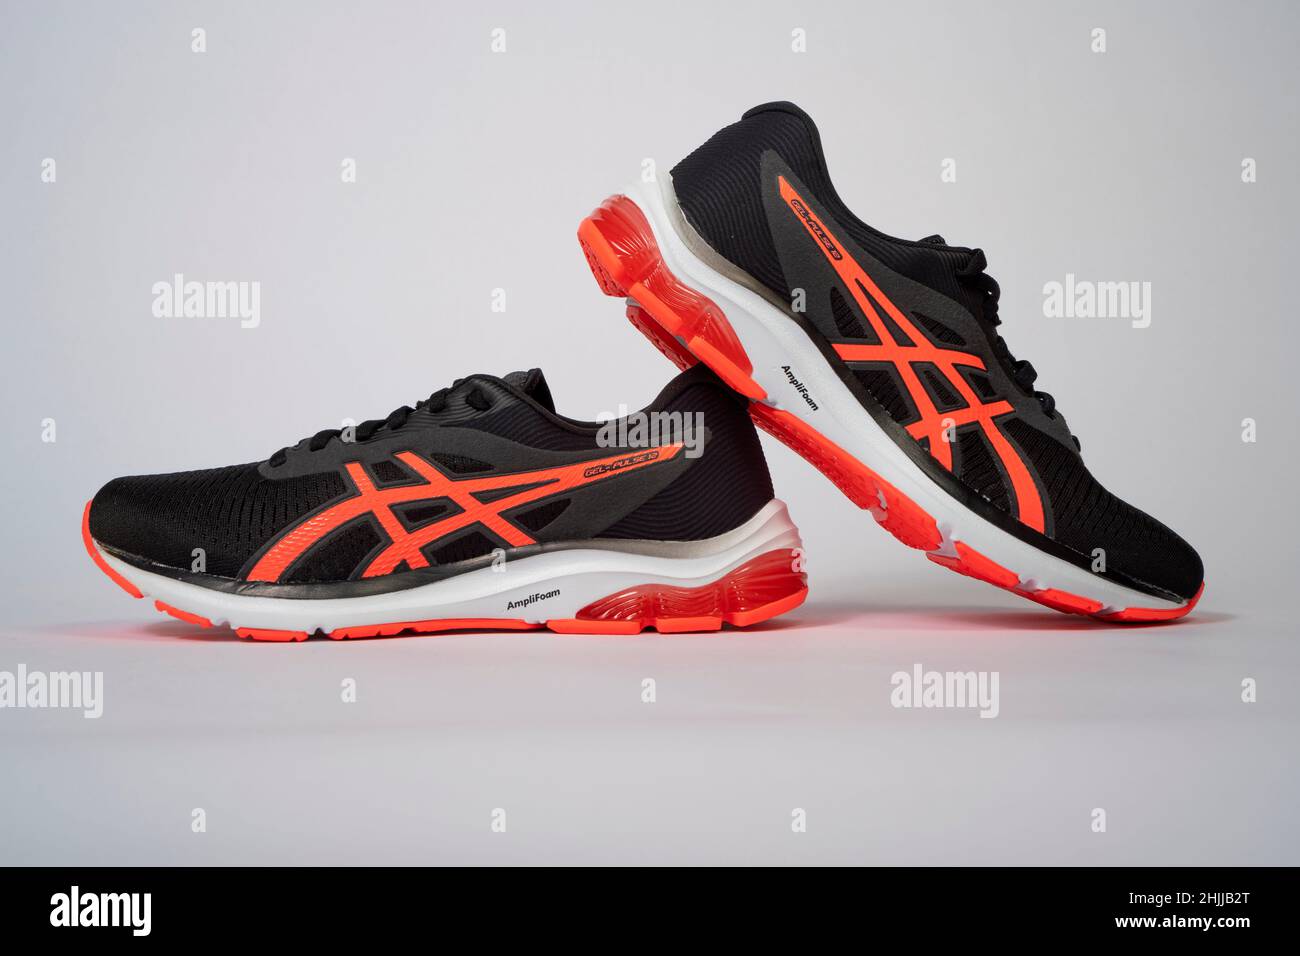 Zapatillas deportivas asics fotografías e imágenes alta resolución - Alamy